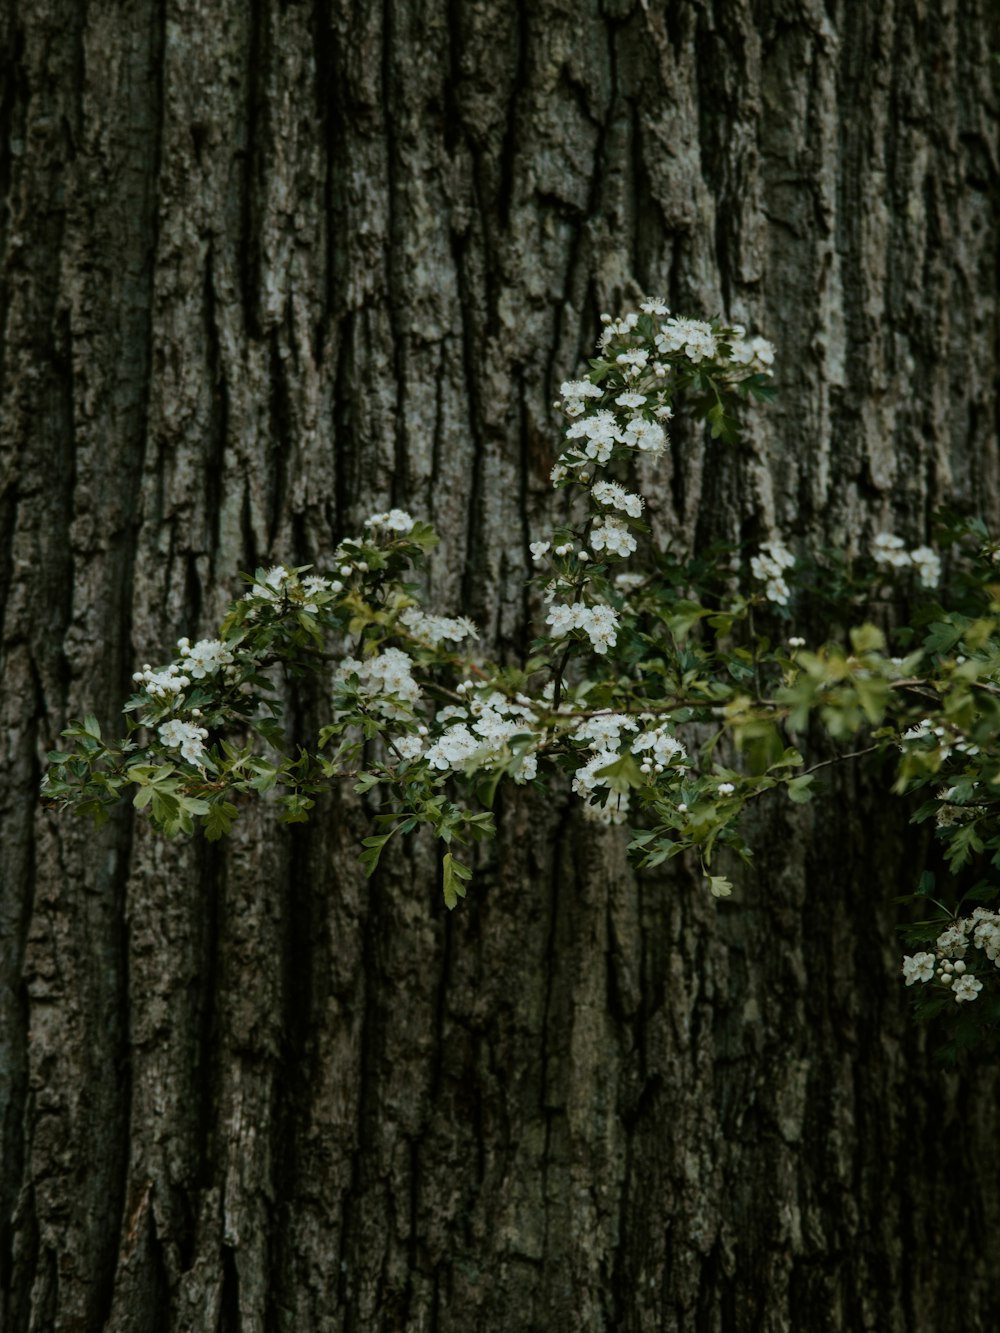 white flowering plant branch beside large tree trunk